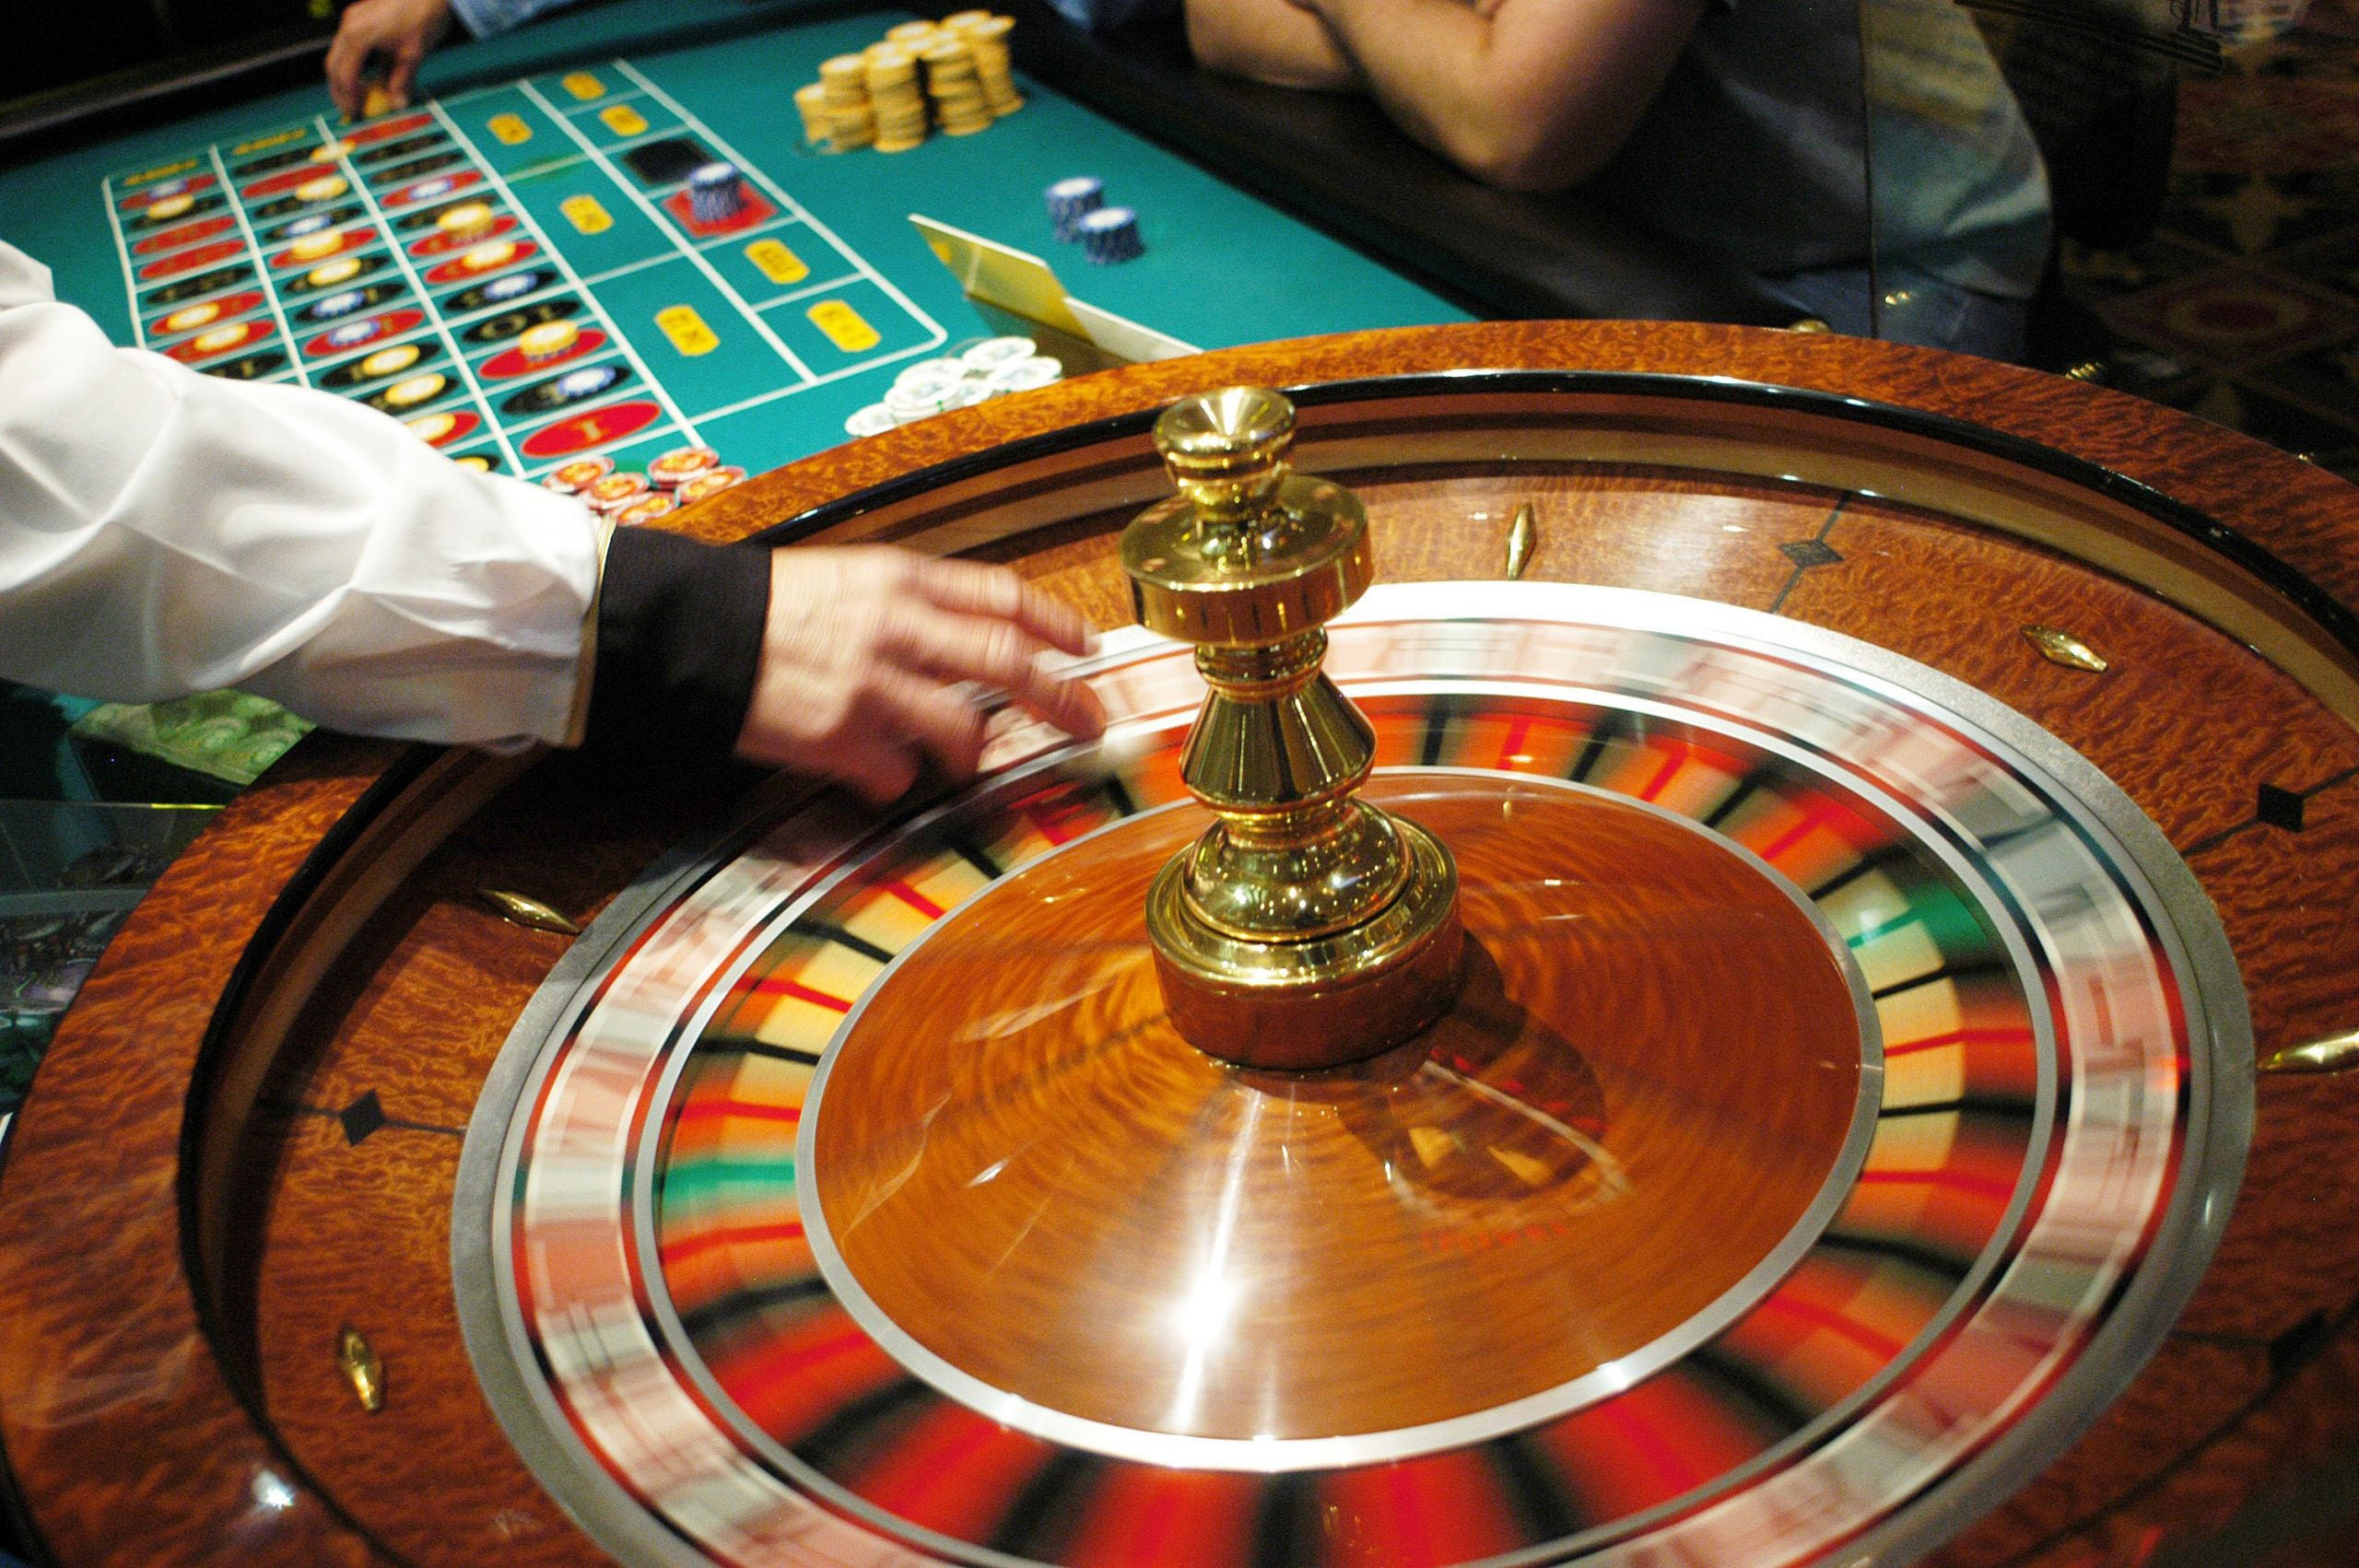 How To Make Money From The casino online Phenomenon